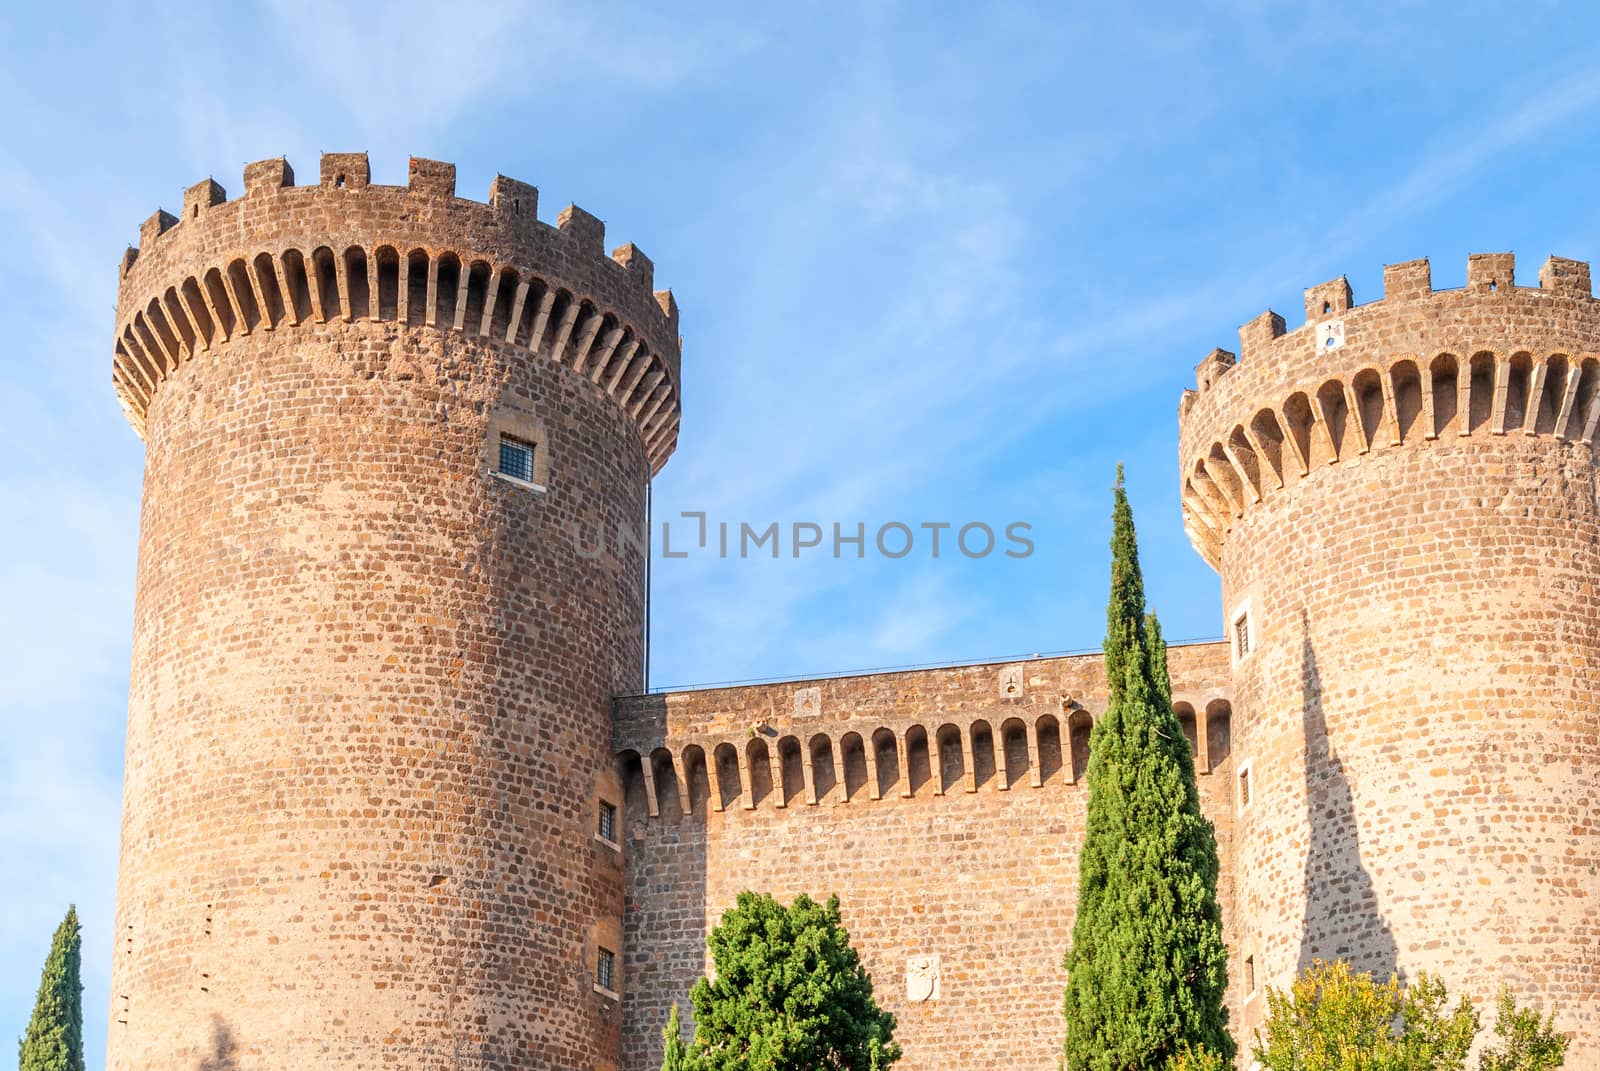 Ancient castle with towers of Rocca Pia in the center of Tivoli, Lazio region, Italy